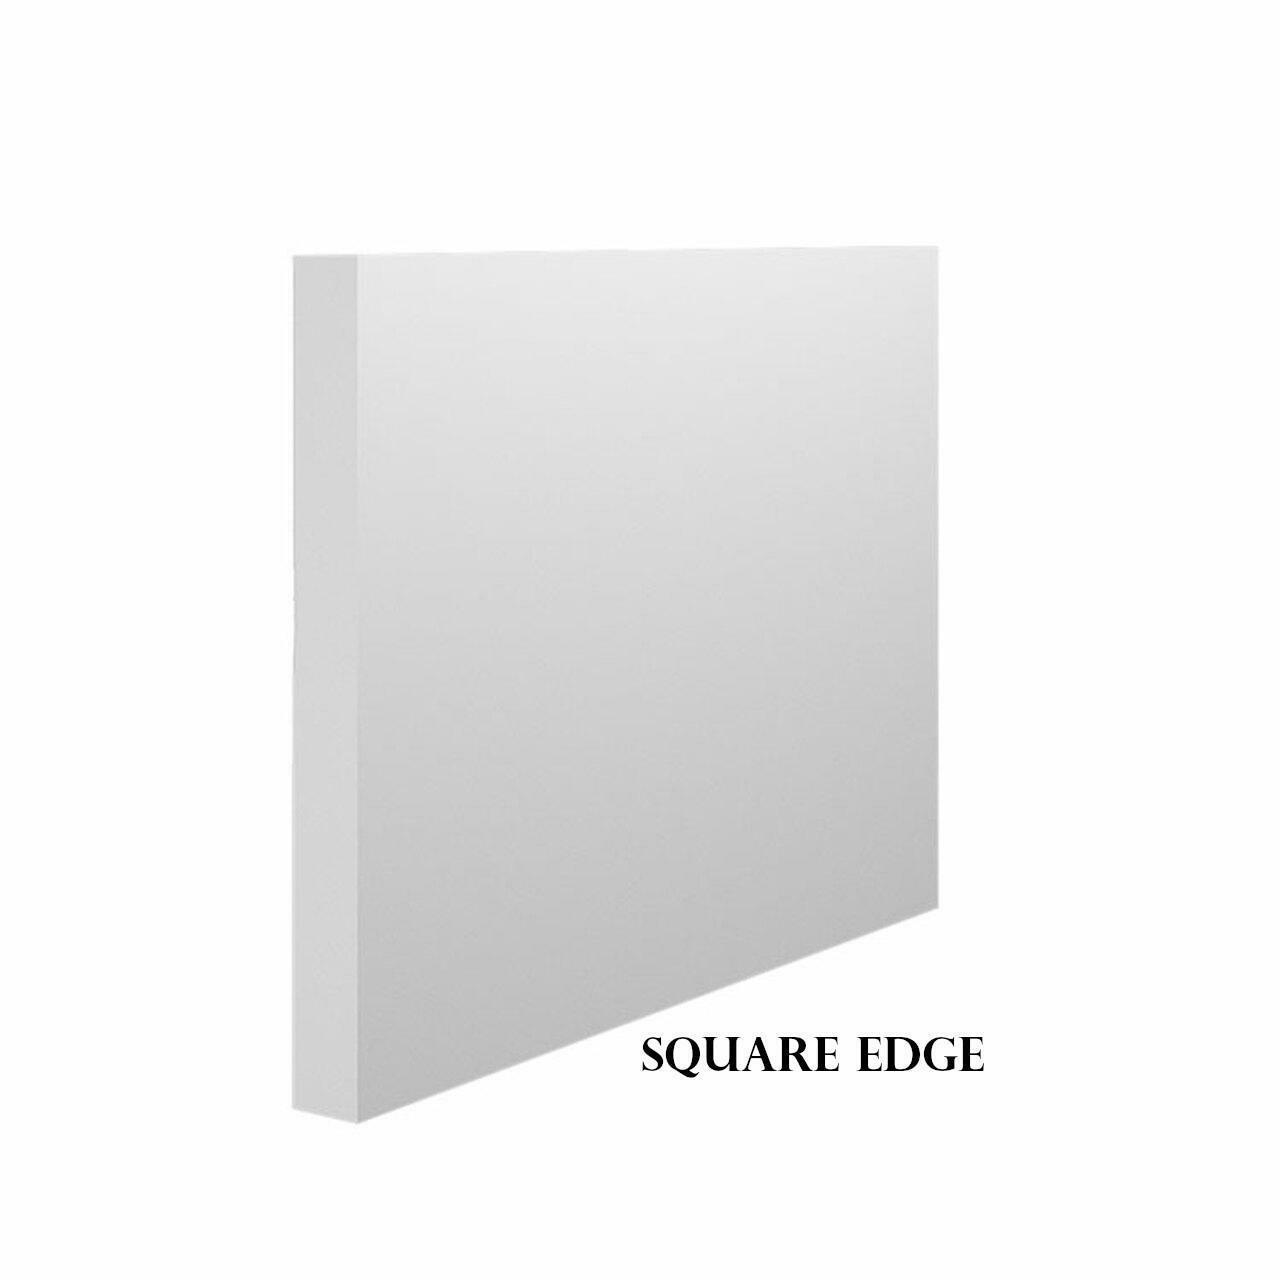 Square Edge - White Primed MDF Skirting & Architrave